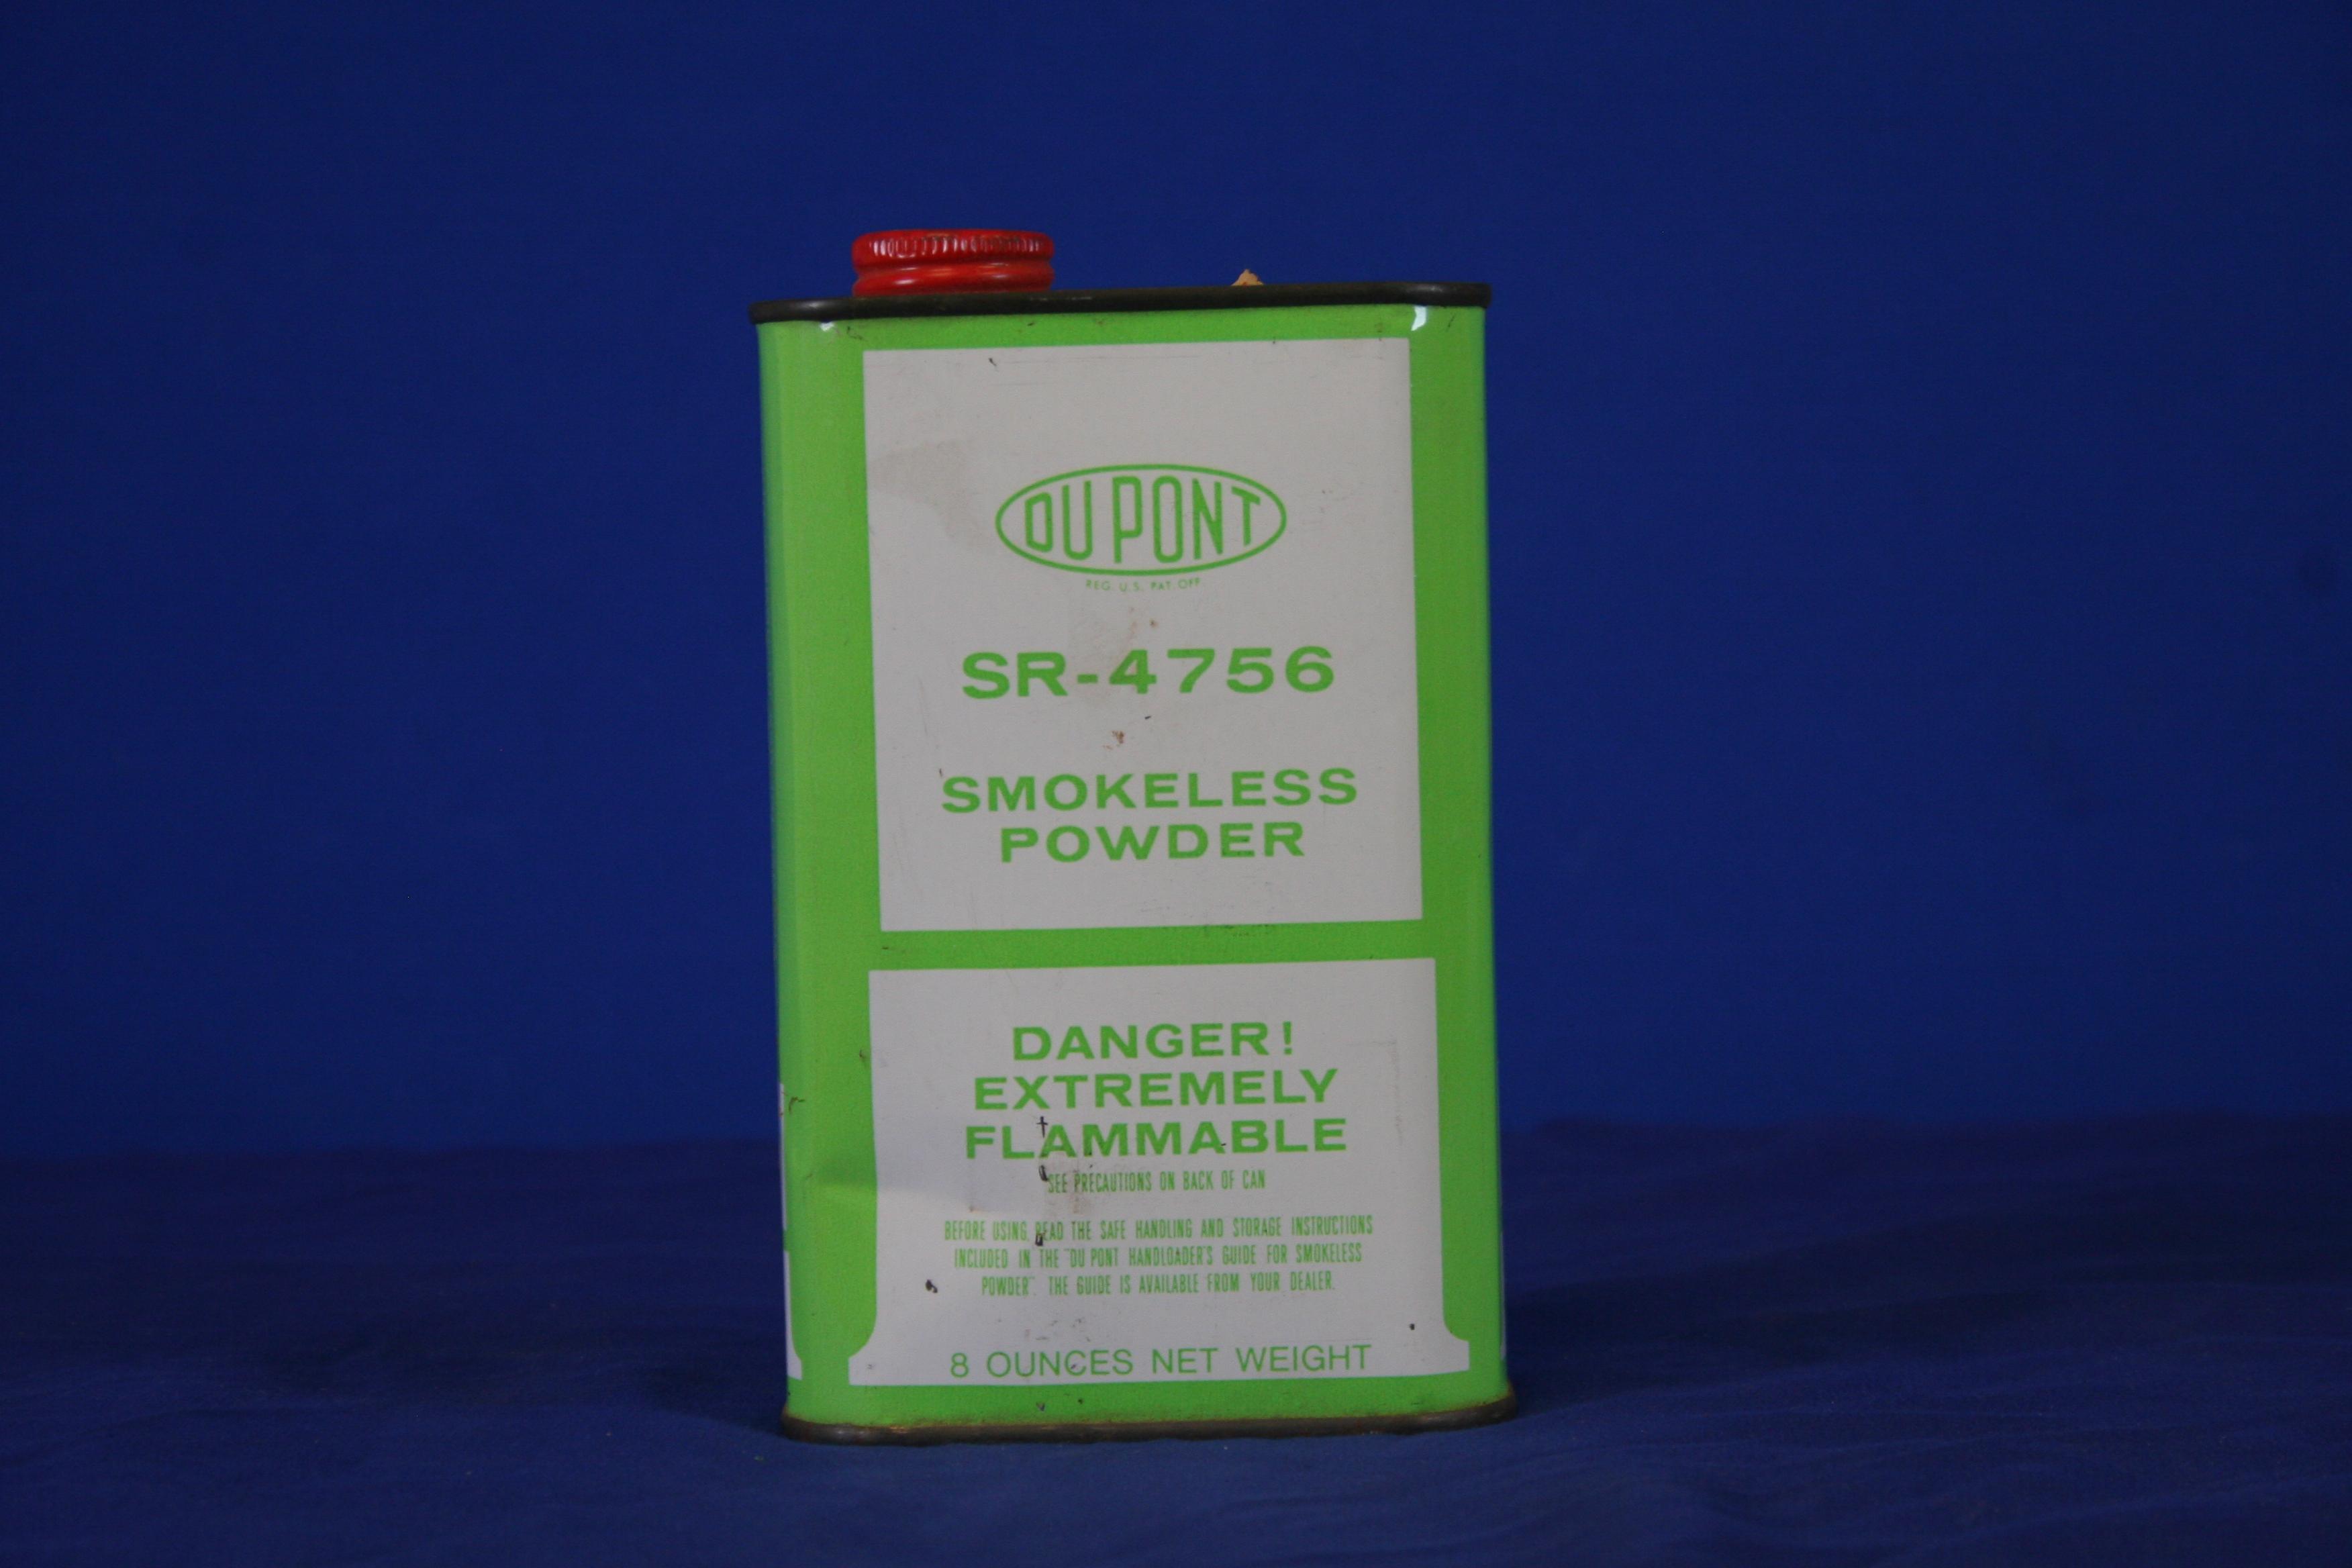 DuPont SR-4756 Smokeless Powder.